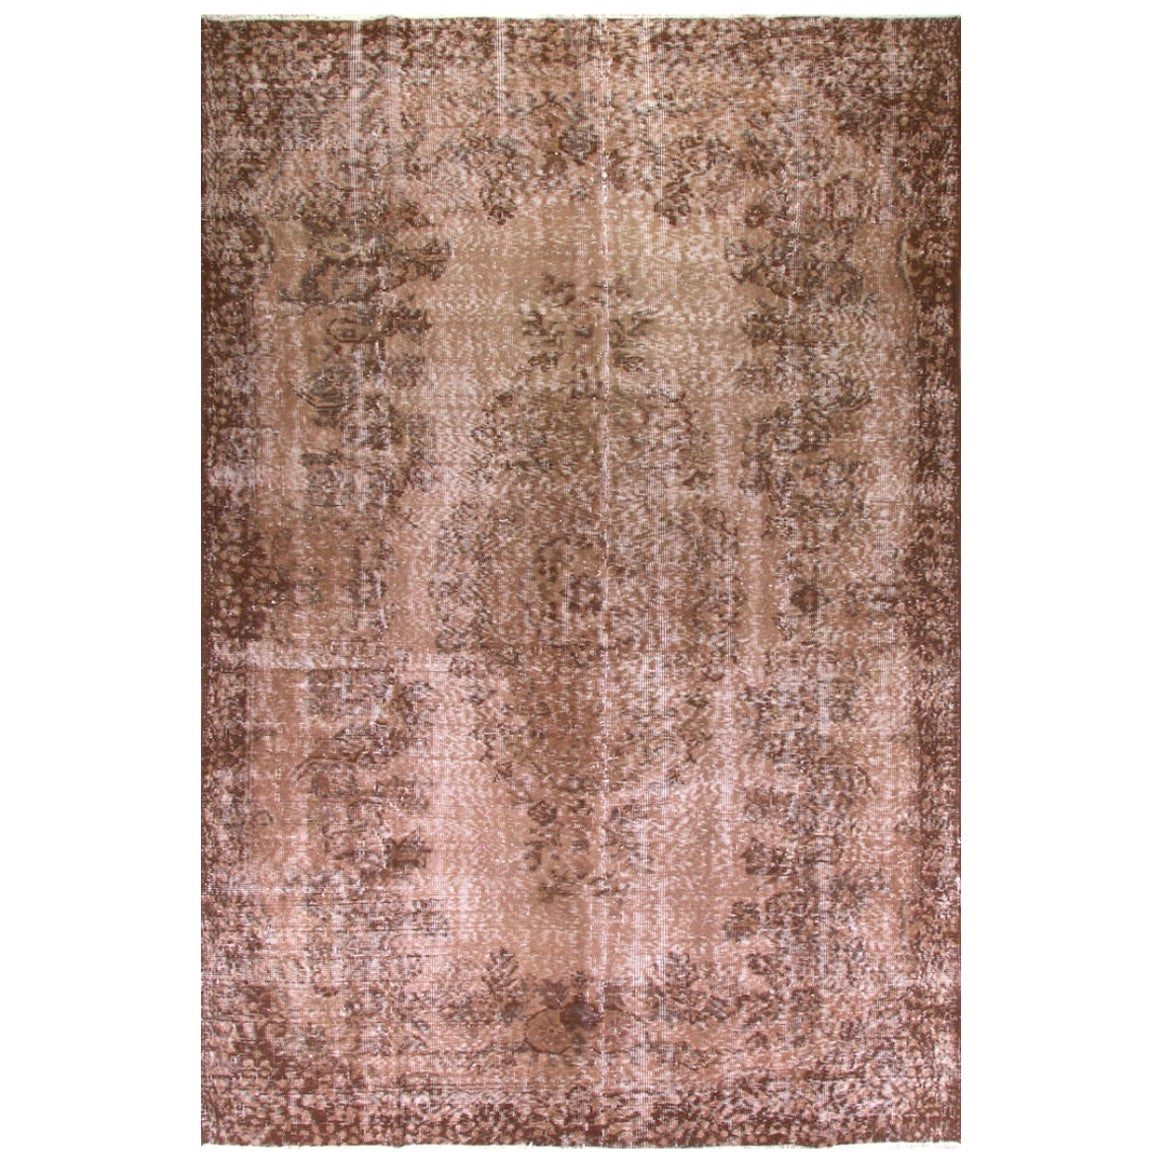 5.5x8.2 ft Brown Handmade Turkish Area Rug, Midcentury Baroque Design Carpet (Tapis de style baroque du milieu du siècle)